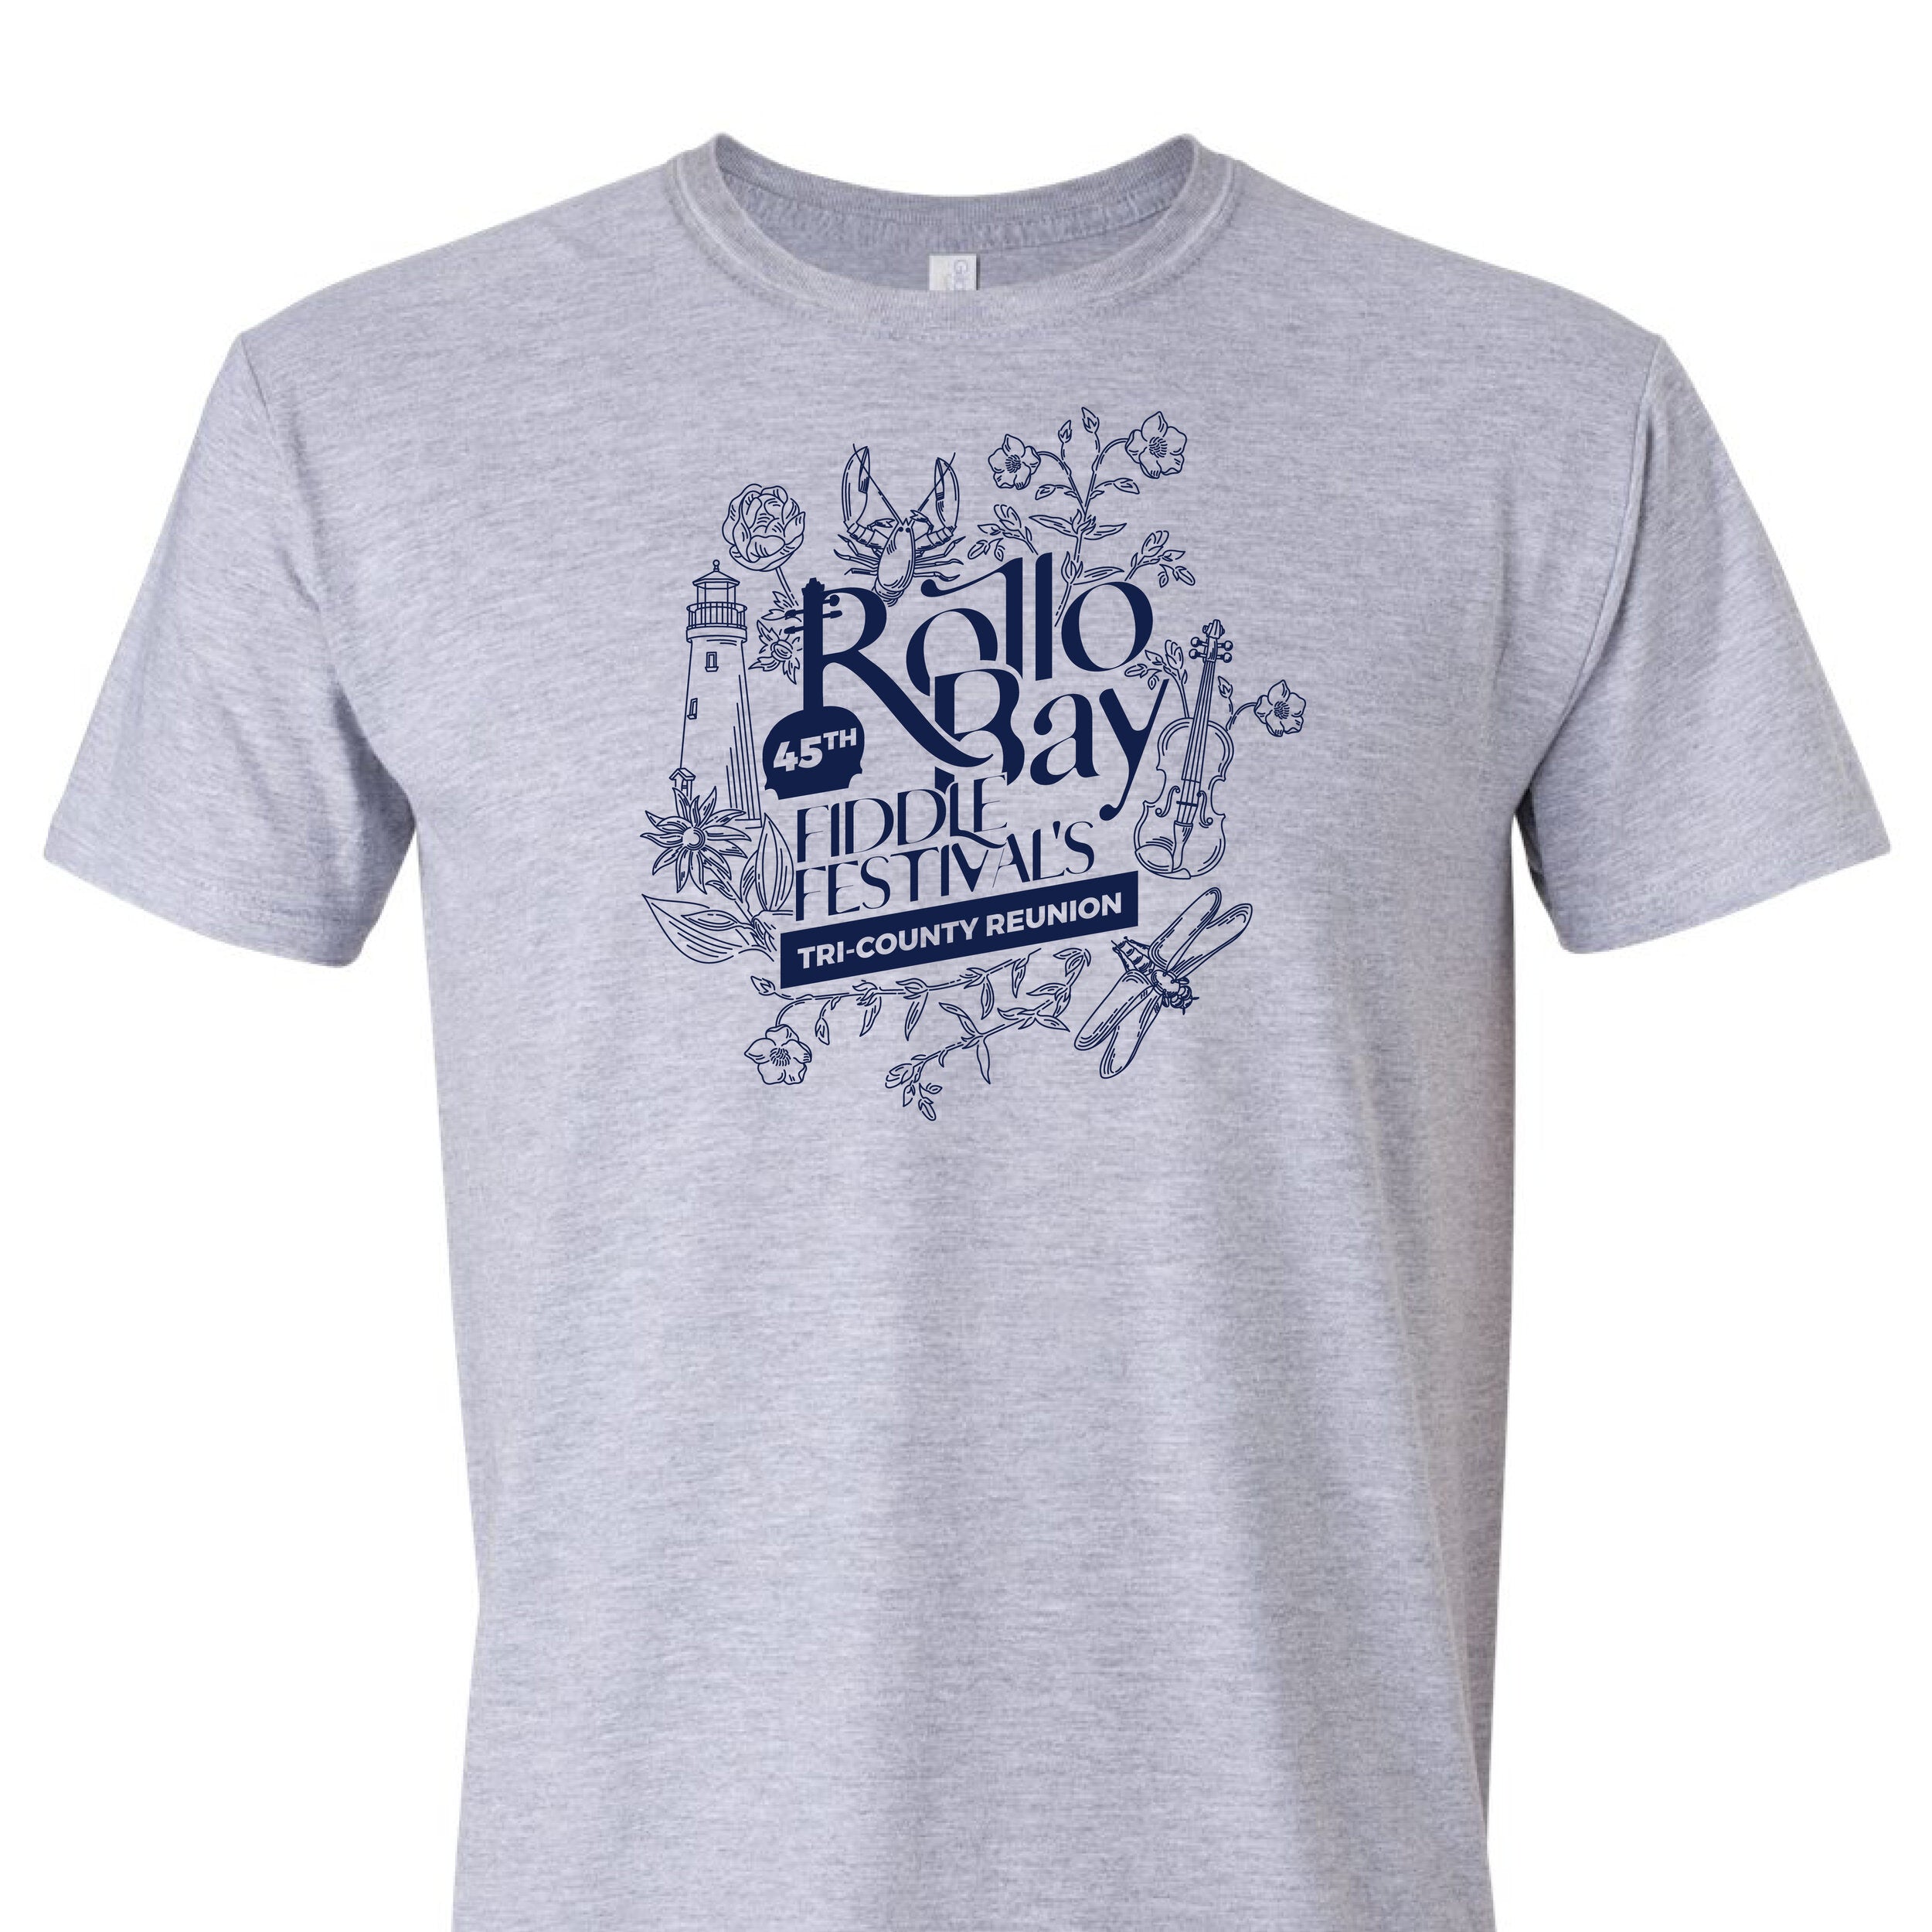 Rollo Bay Fiddle Festival T-shirt